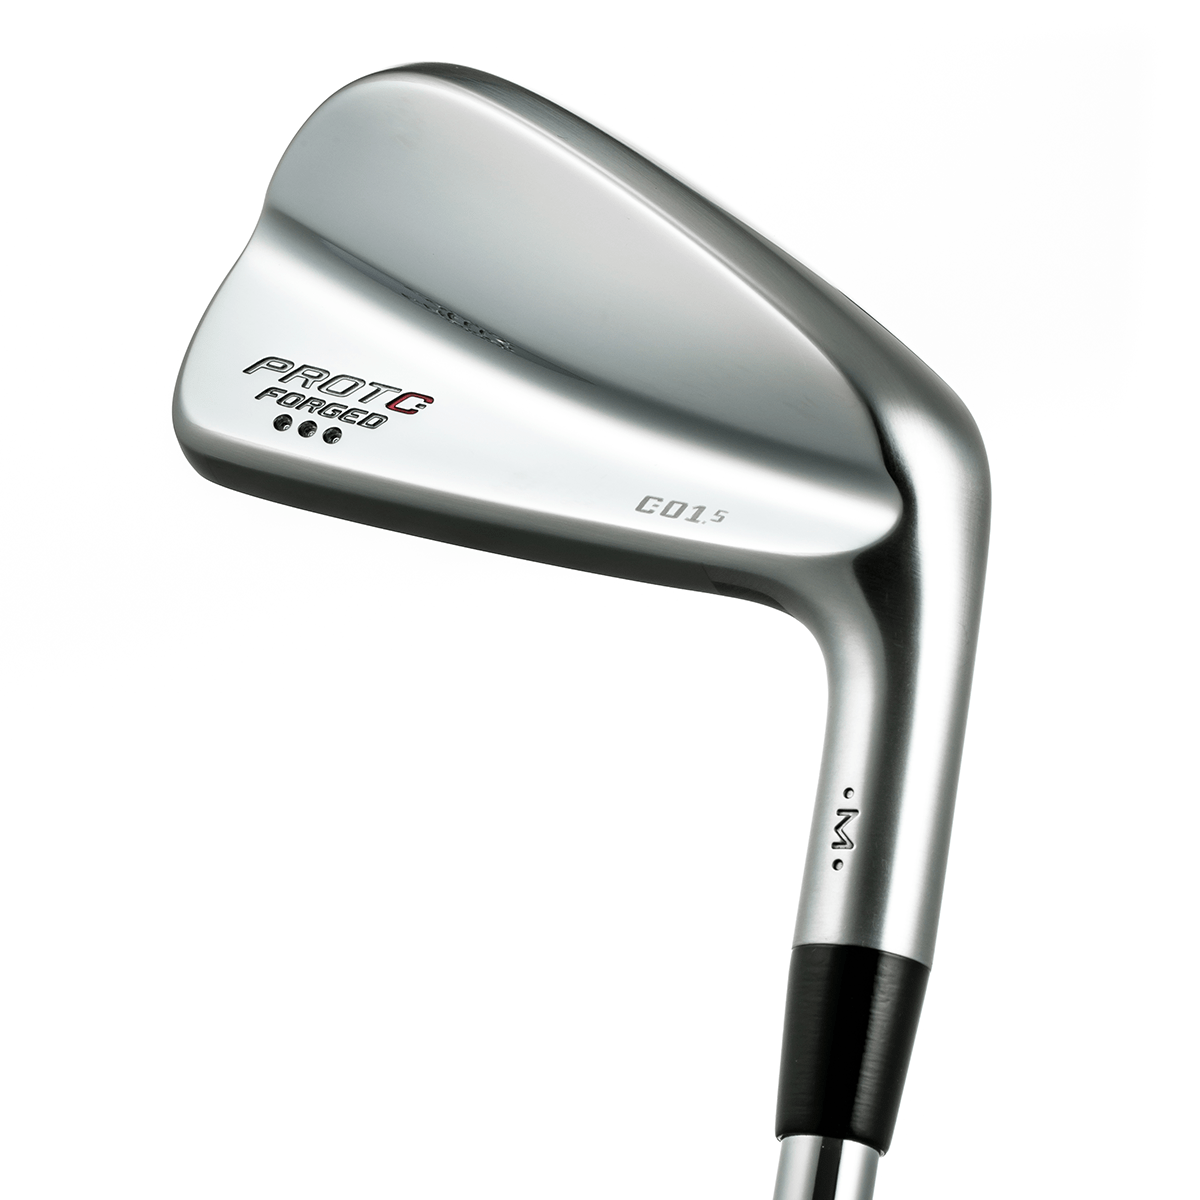 PROTOCONCEPT Golf, C01.5 Forged Iron ーHybrid Iron, golf iron